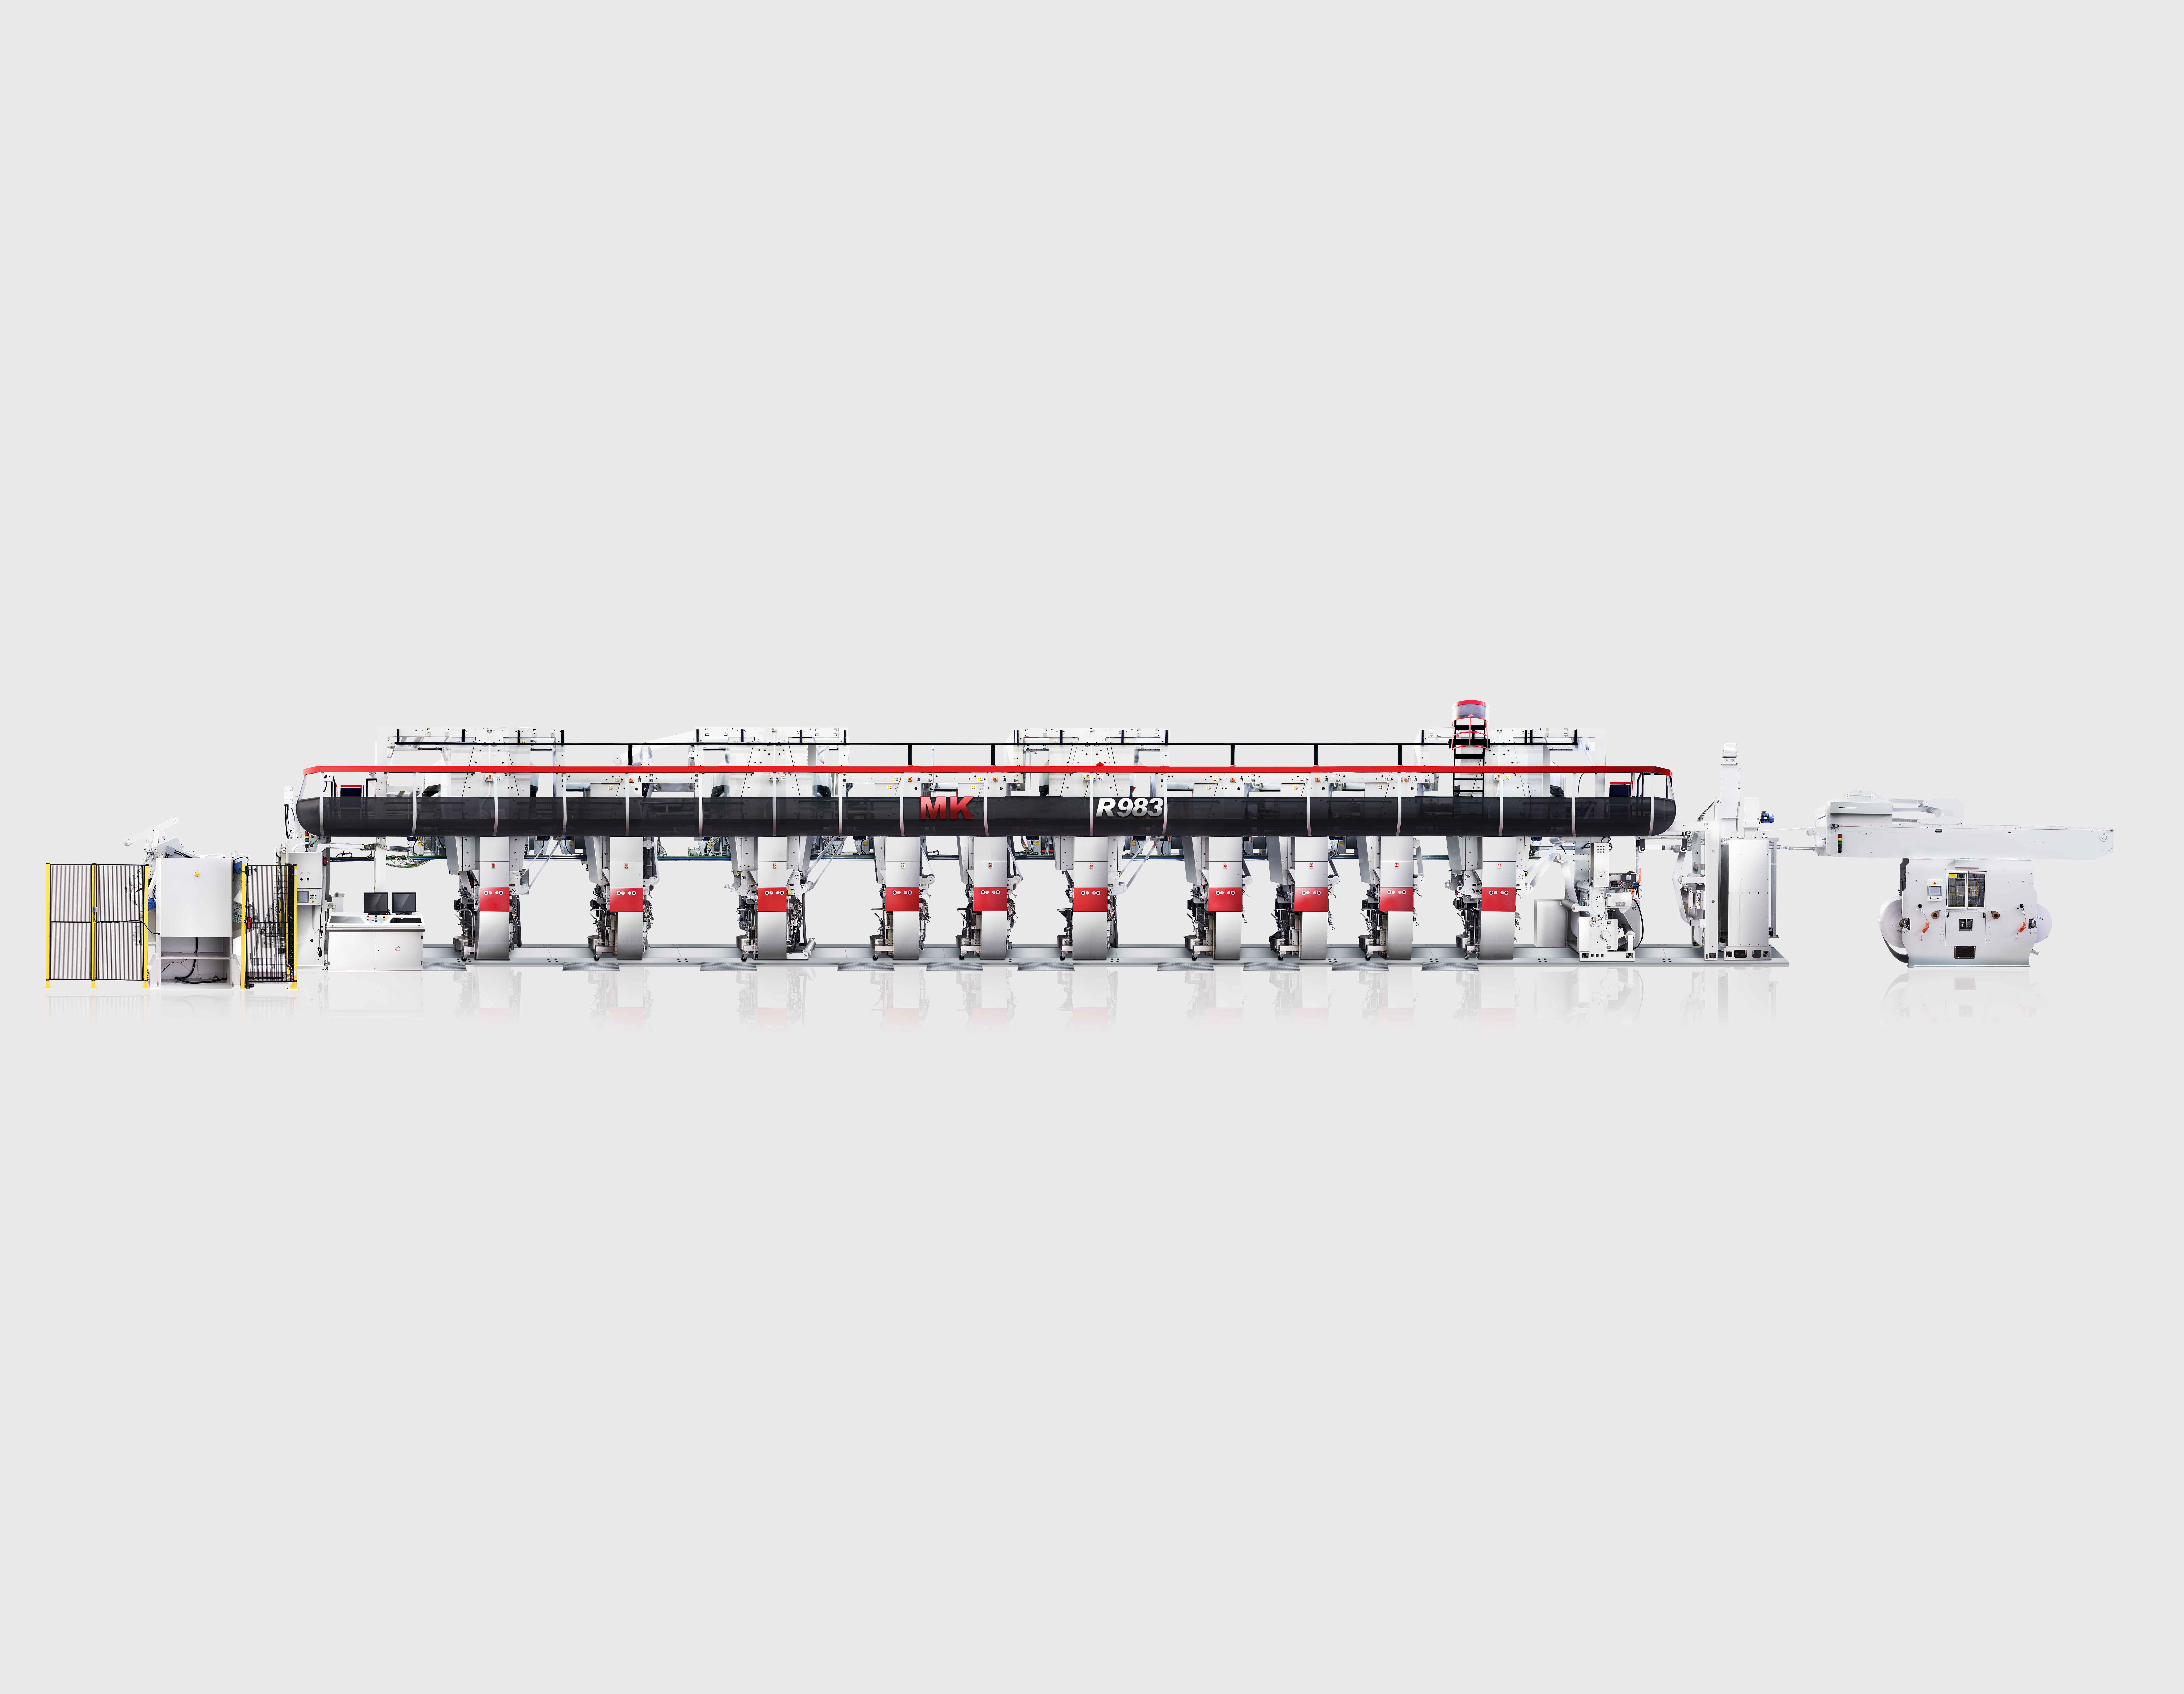 MK CerrutiR983凹印机
技术描述：凹印技术
2015年，长荣与意大利赛鲁迪集团签订的关于R983凹印机永久性技术许可协议。2016年首台MK CerrutiR983凹印机交机。长荣迈出了卷筒纸印刷包装领域战略布局实质性的一步，打造出从印后到印刷烟包整厂解决方案。